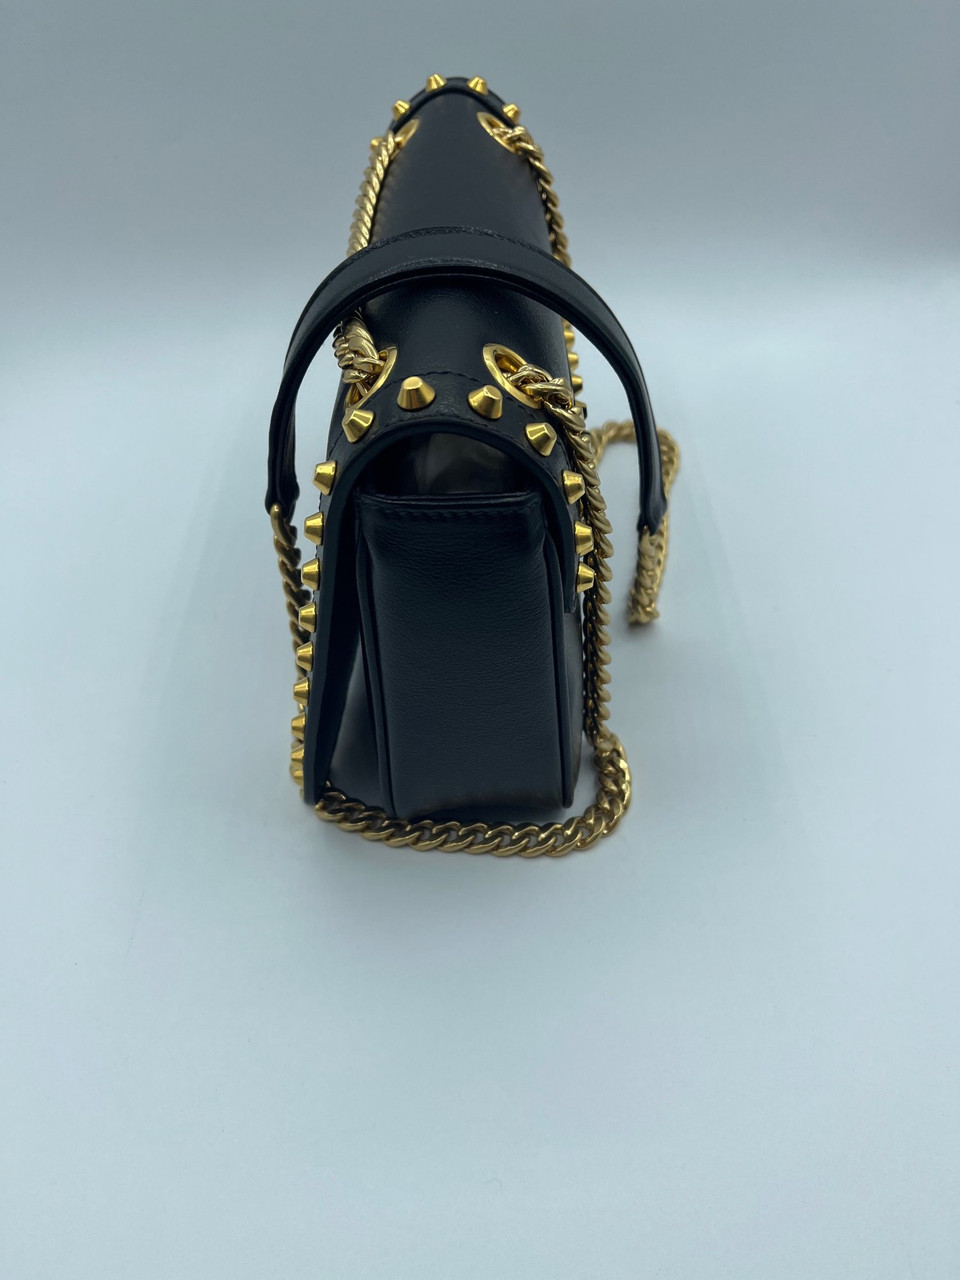 PRADA Chain Plain Leather Elegant Style Logo Shoulder Bags